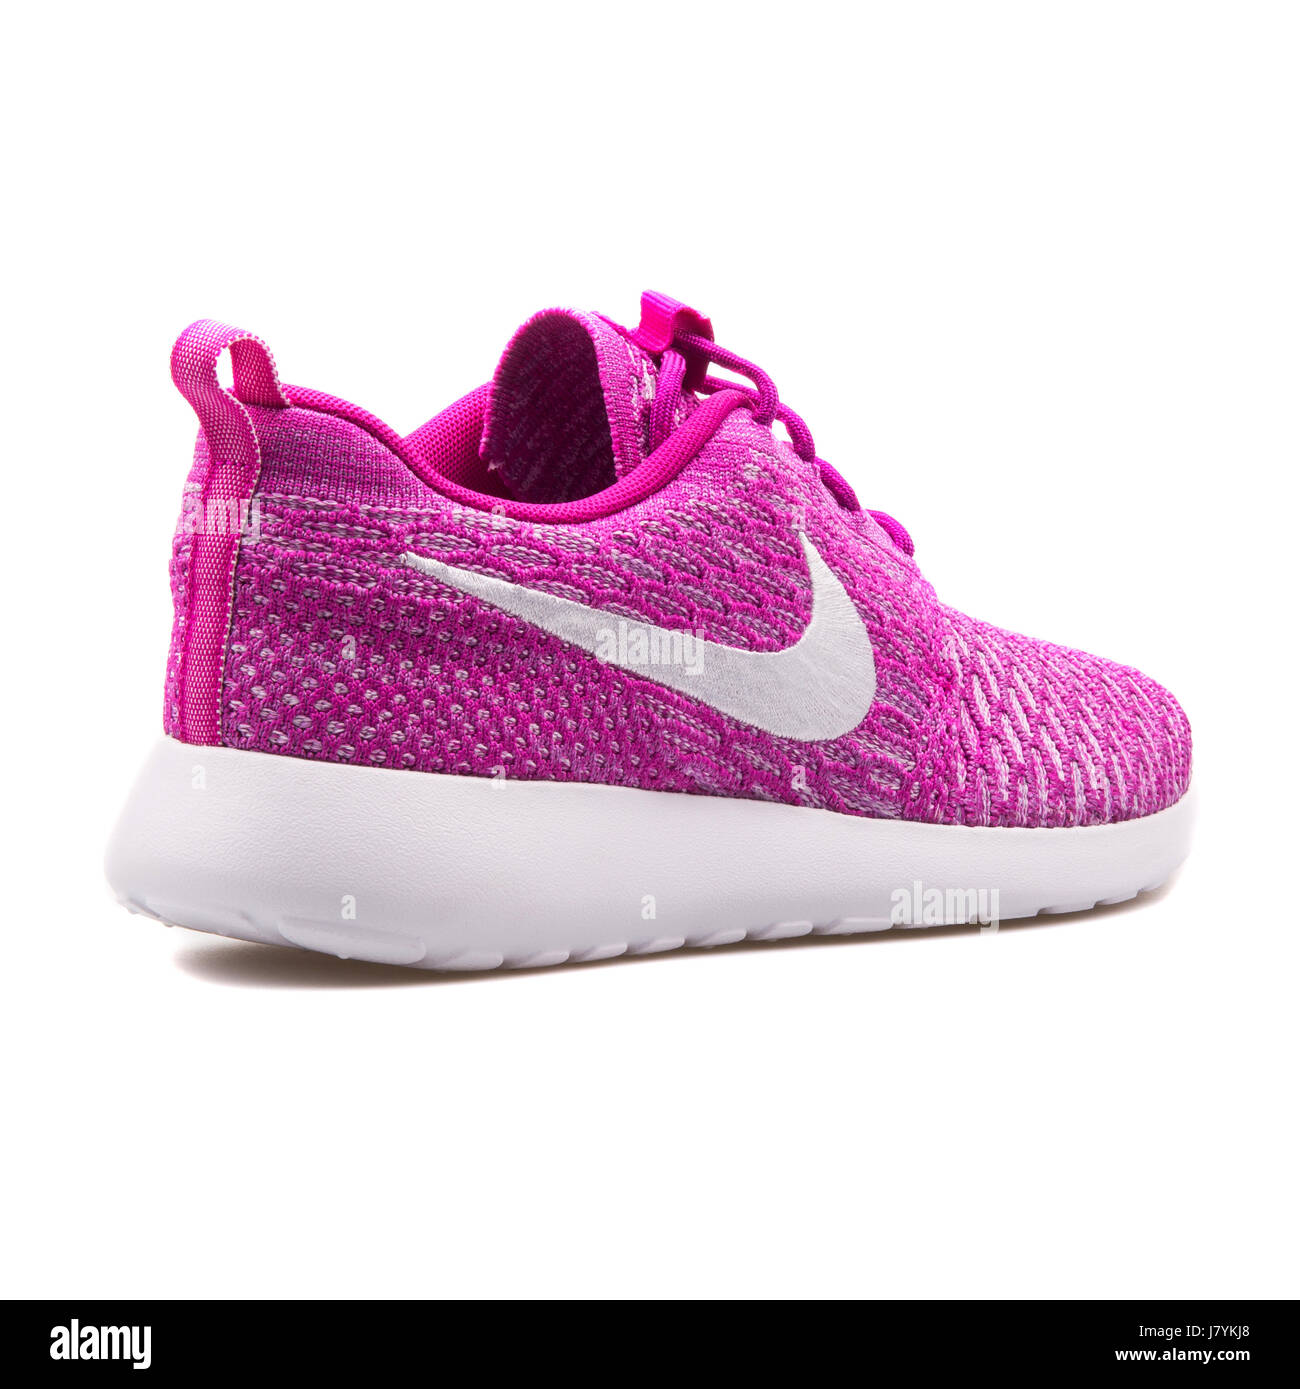 Nike WMNS Rosherun Flyknit Damen Fuchsia Running Sneaker - 704927-500  Stockfotografie - Alamy